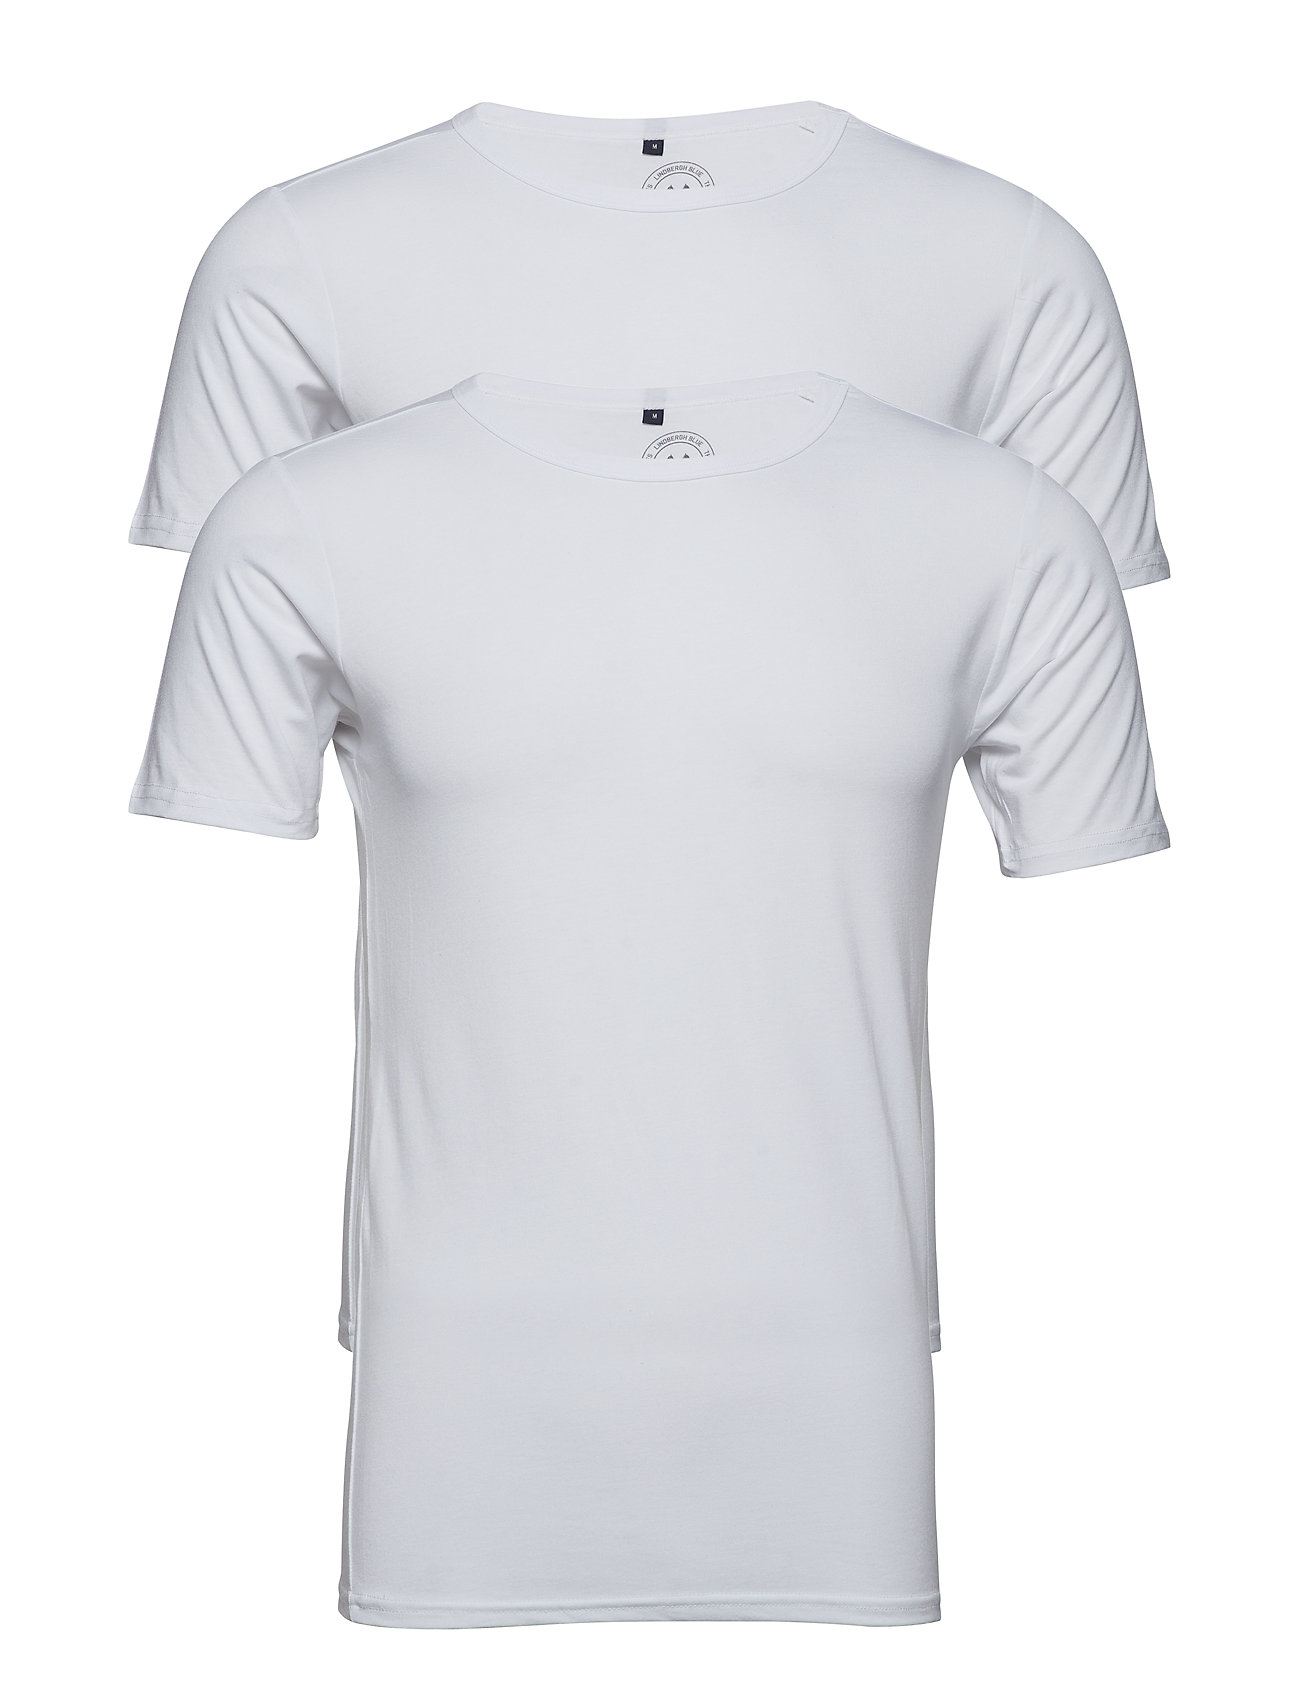 Basic Bamboo Tee S/S 2 Pack Tops T-shirts Short-sleeved White Lindbergh